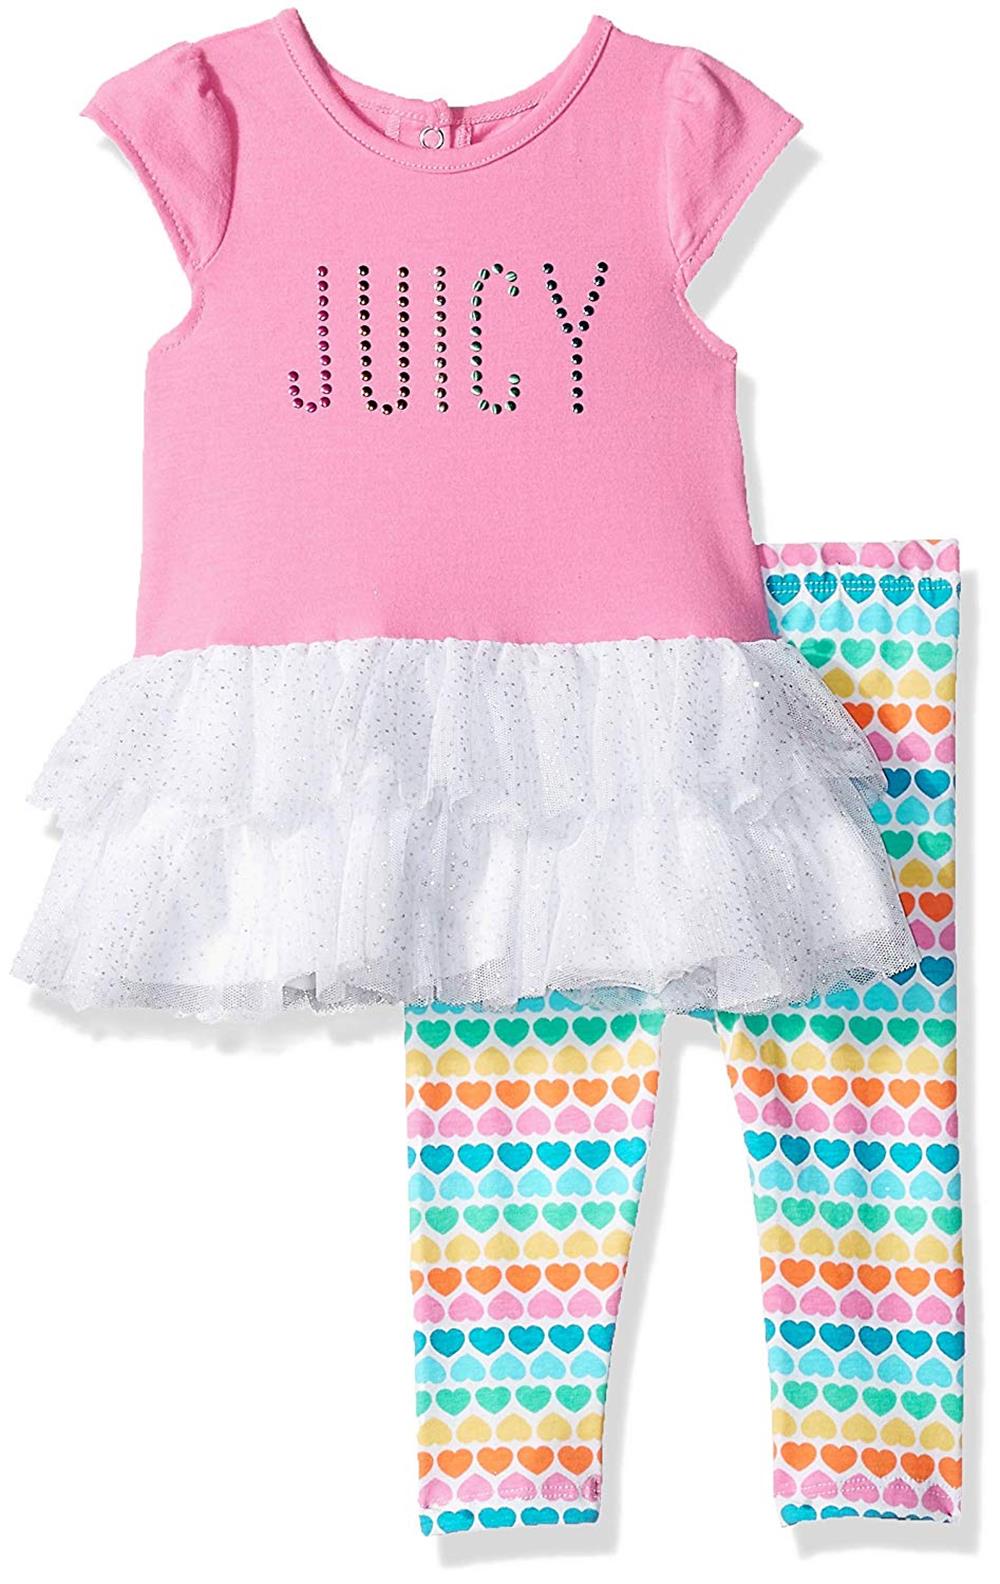 Juicy Couture Girls 3-9 Months Tunic Legging Set